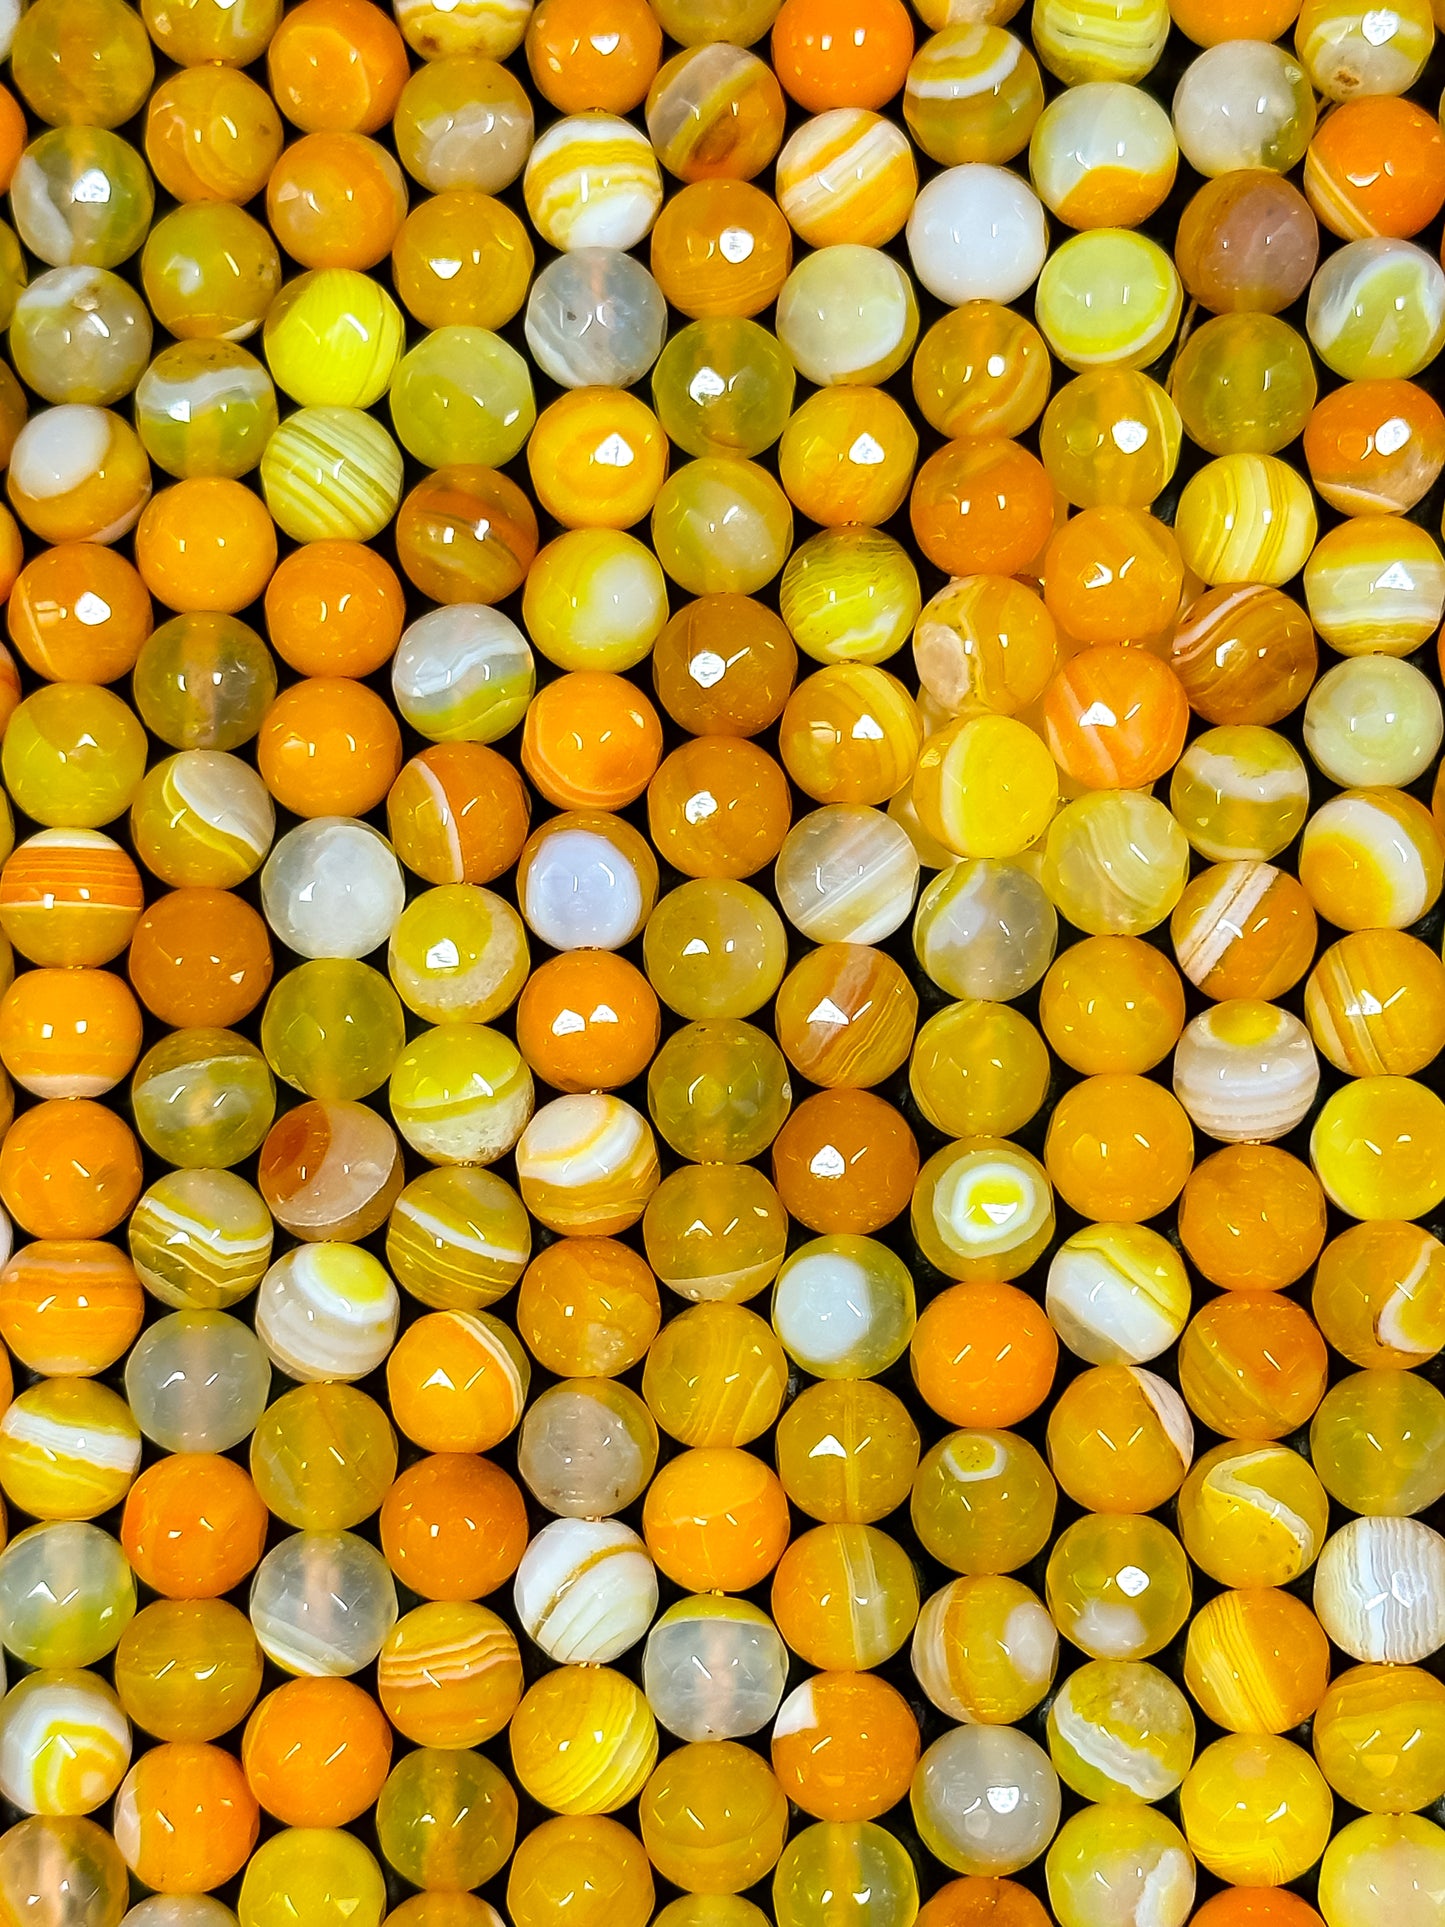 NATURAL Botswana Agate Gemstone Bead Faceted 6mm 8mm 10mm 12mm Round Beads, Beautiful Orange Yellow Color Gemstone Beads Full Strand 15.5"